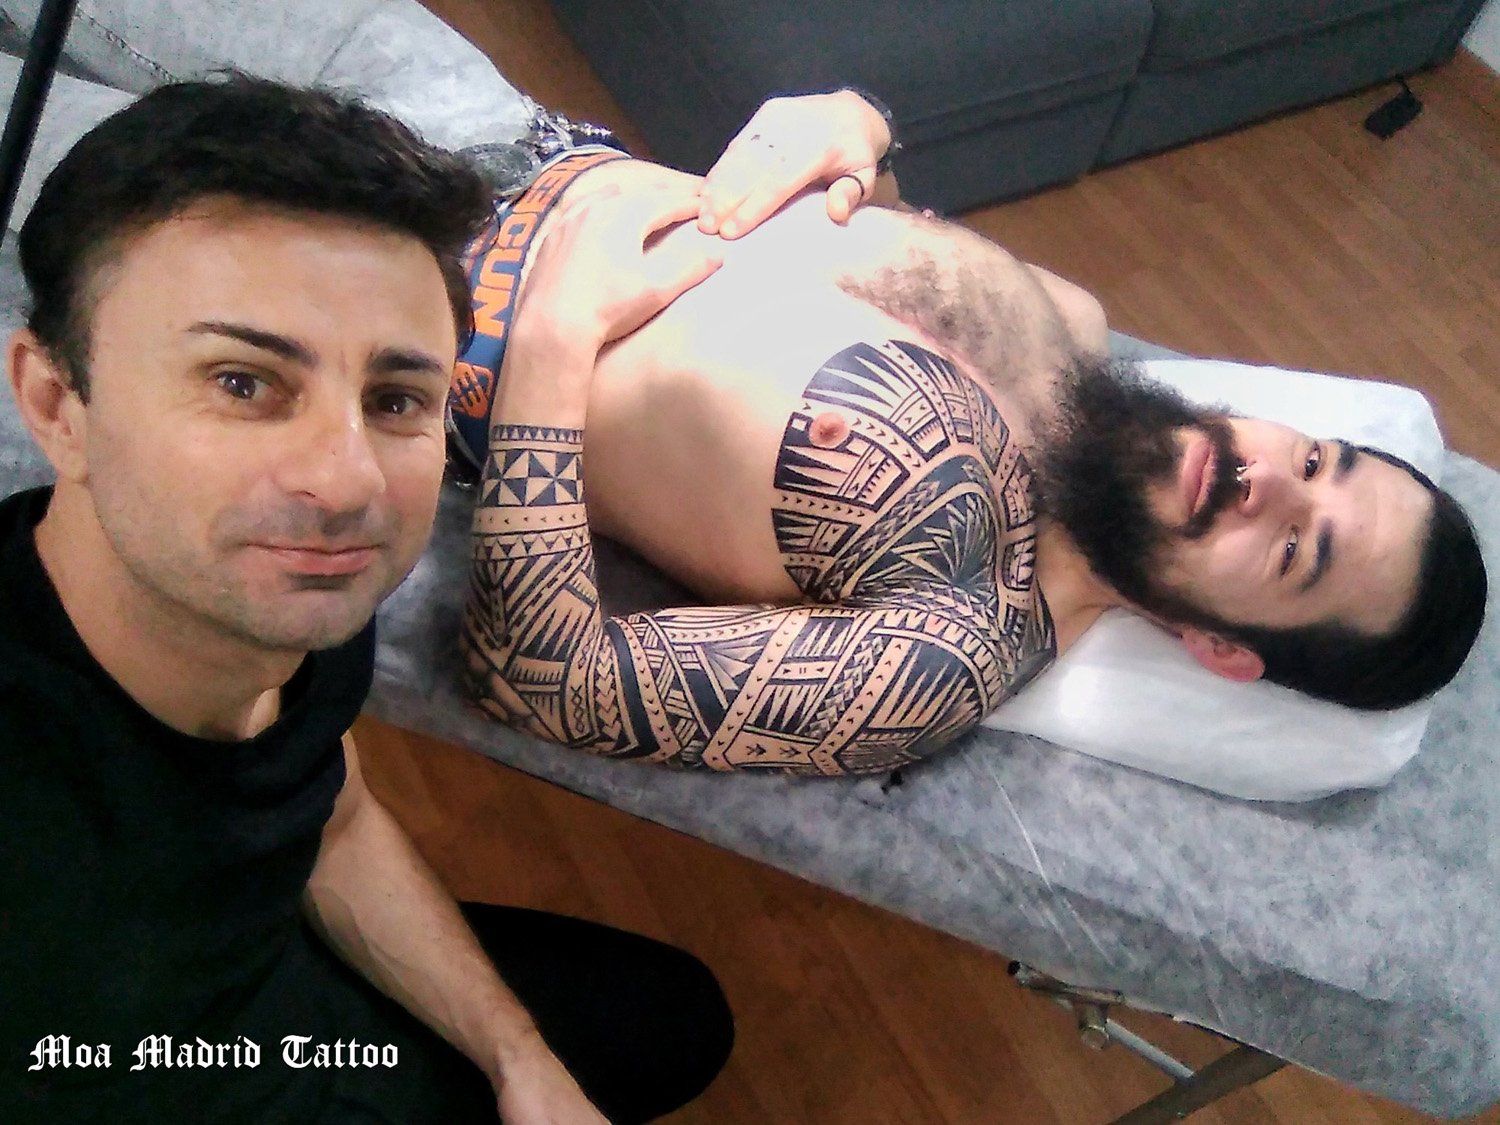 Tatuaje maorí diseño exclusivo Moa Madrid Tattoo, tu tatuador maorí en Madrid